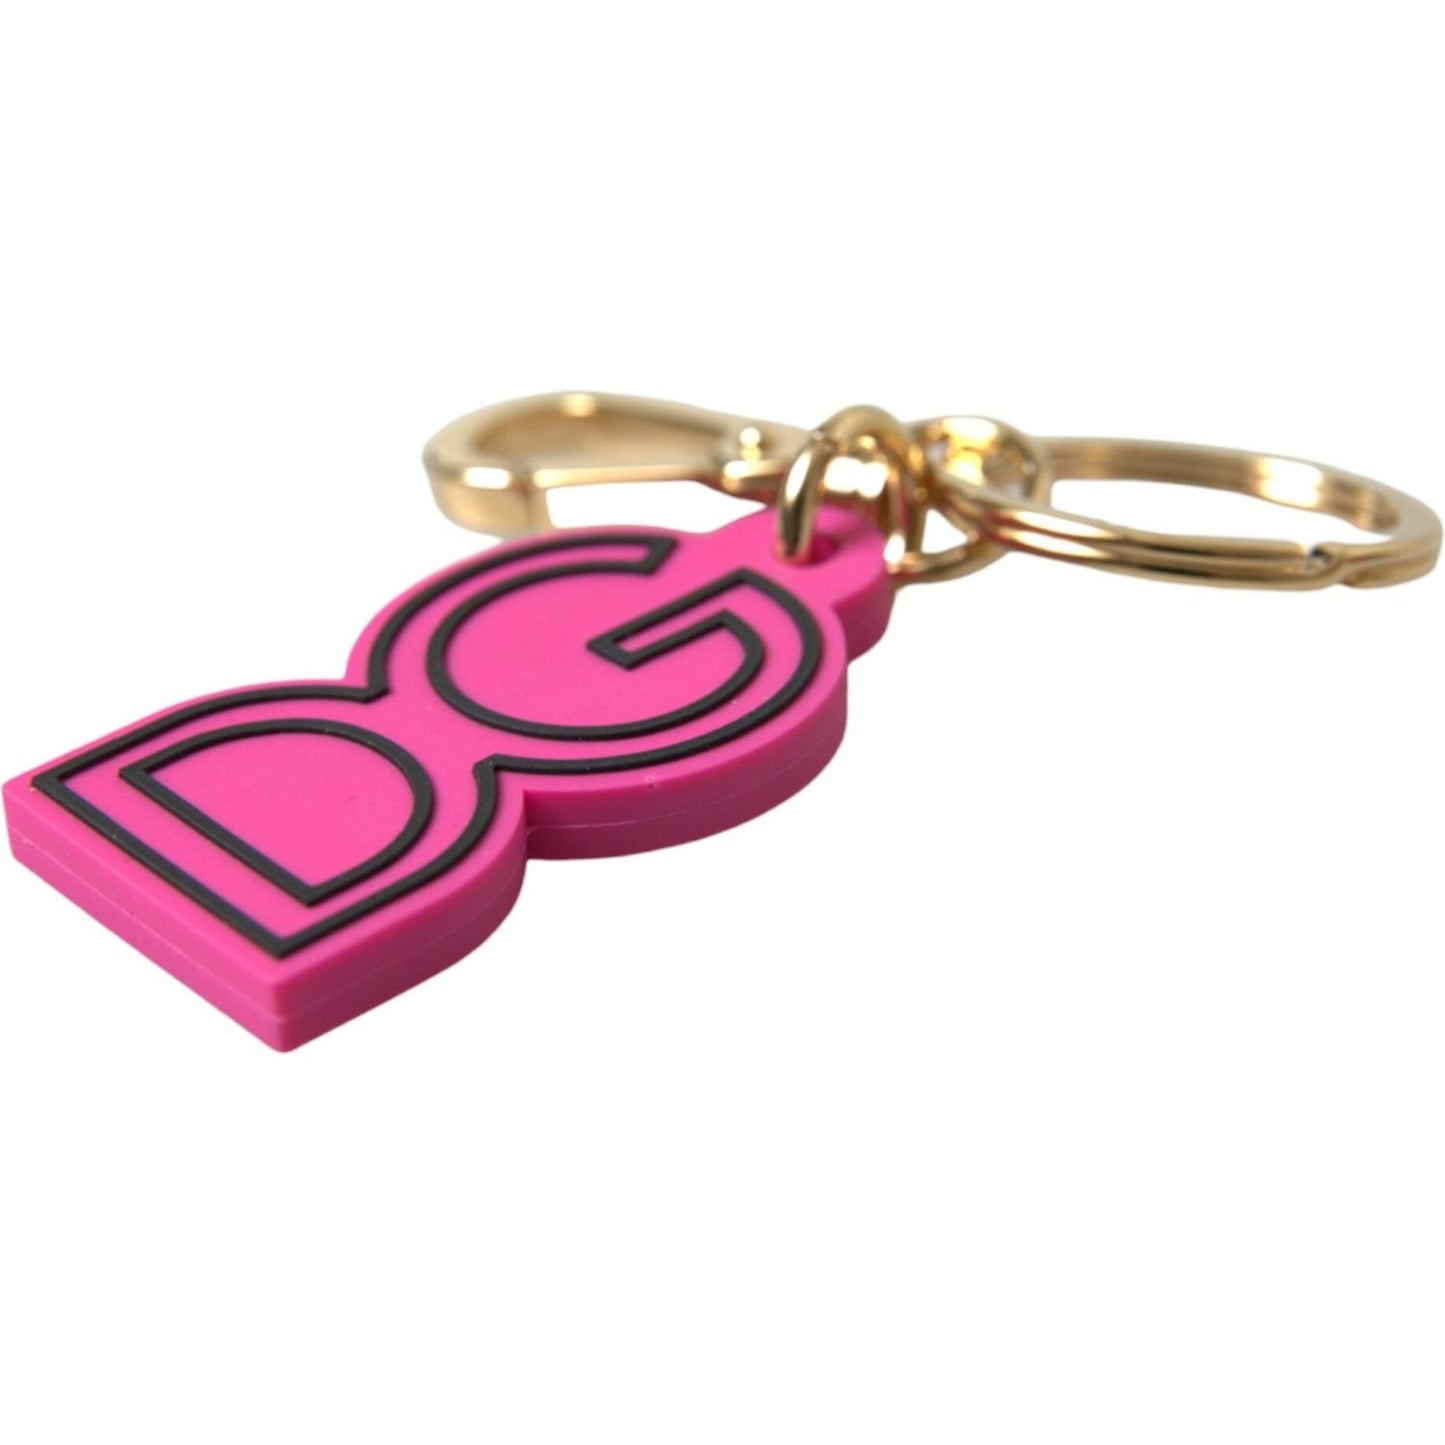 Dolce & Gabbana Chic Gold and Pink Keychain Elegance chic-gold-and-pink-keychain-elegance